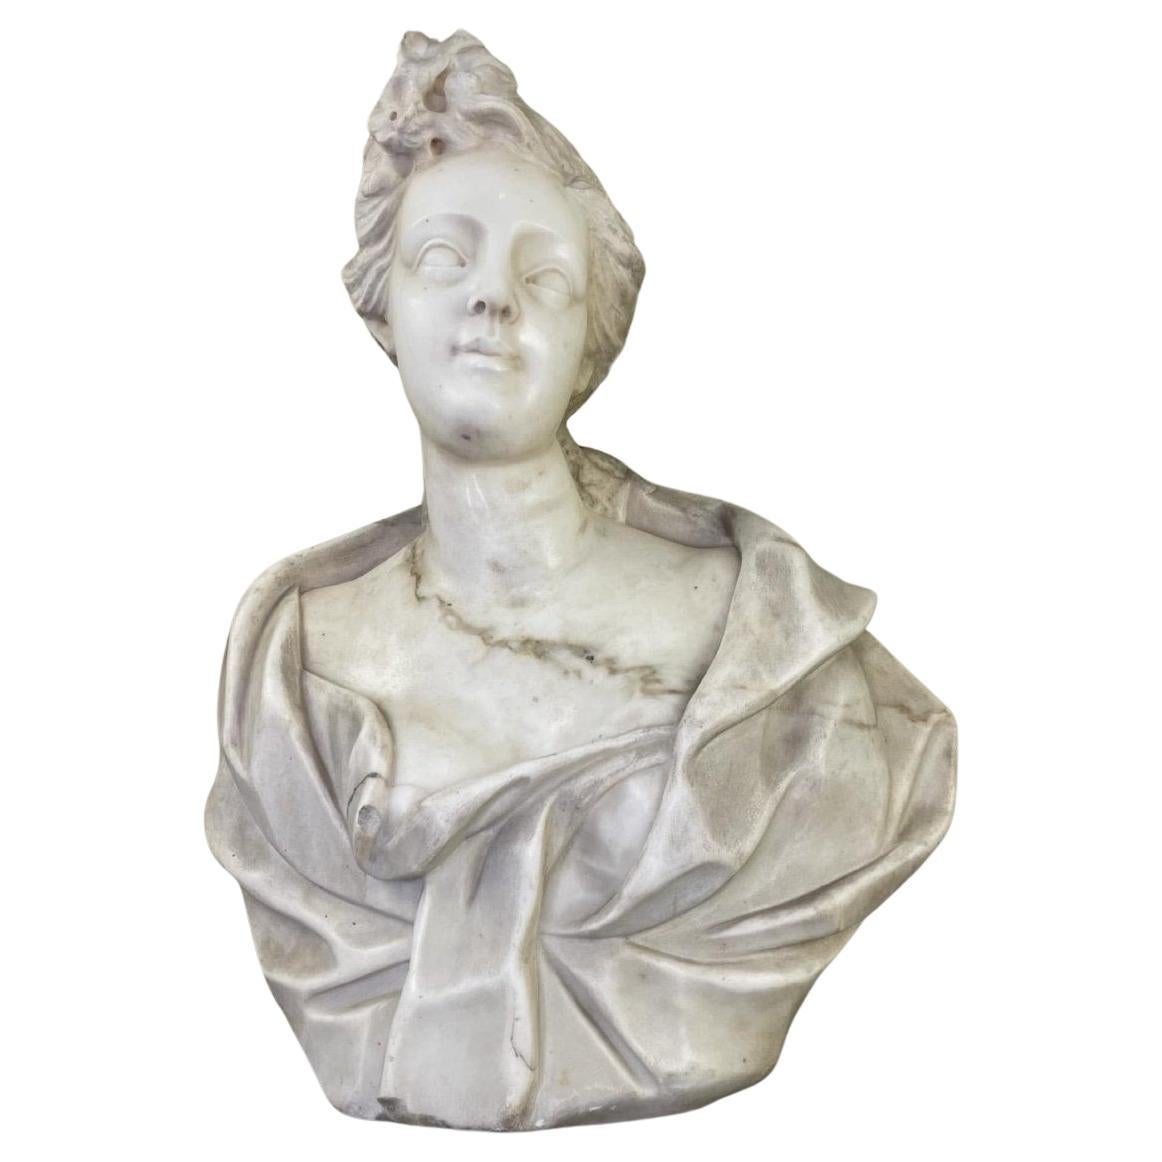 Buste féminin en marbre de Carrare, fin du 18e siècle, Italie du Nord